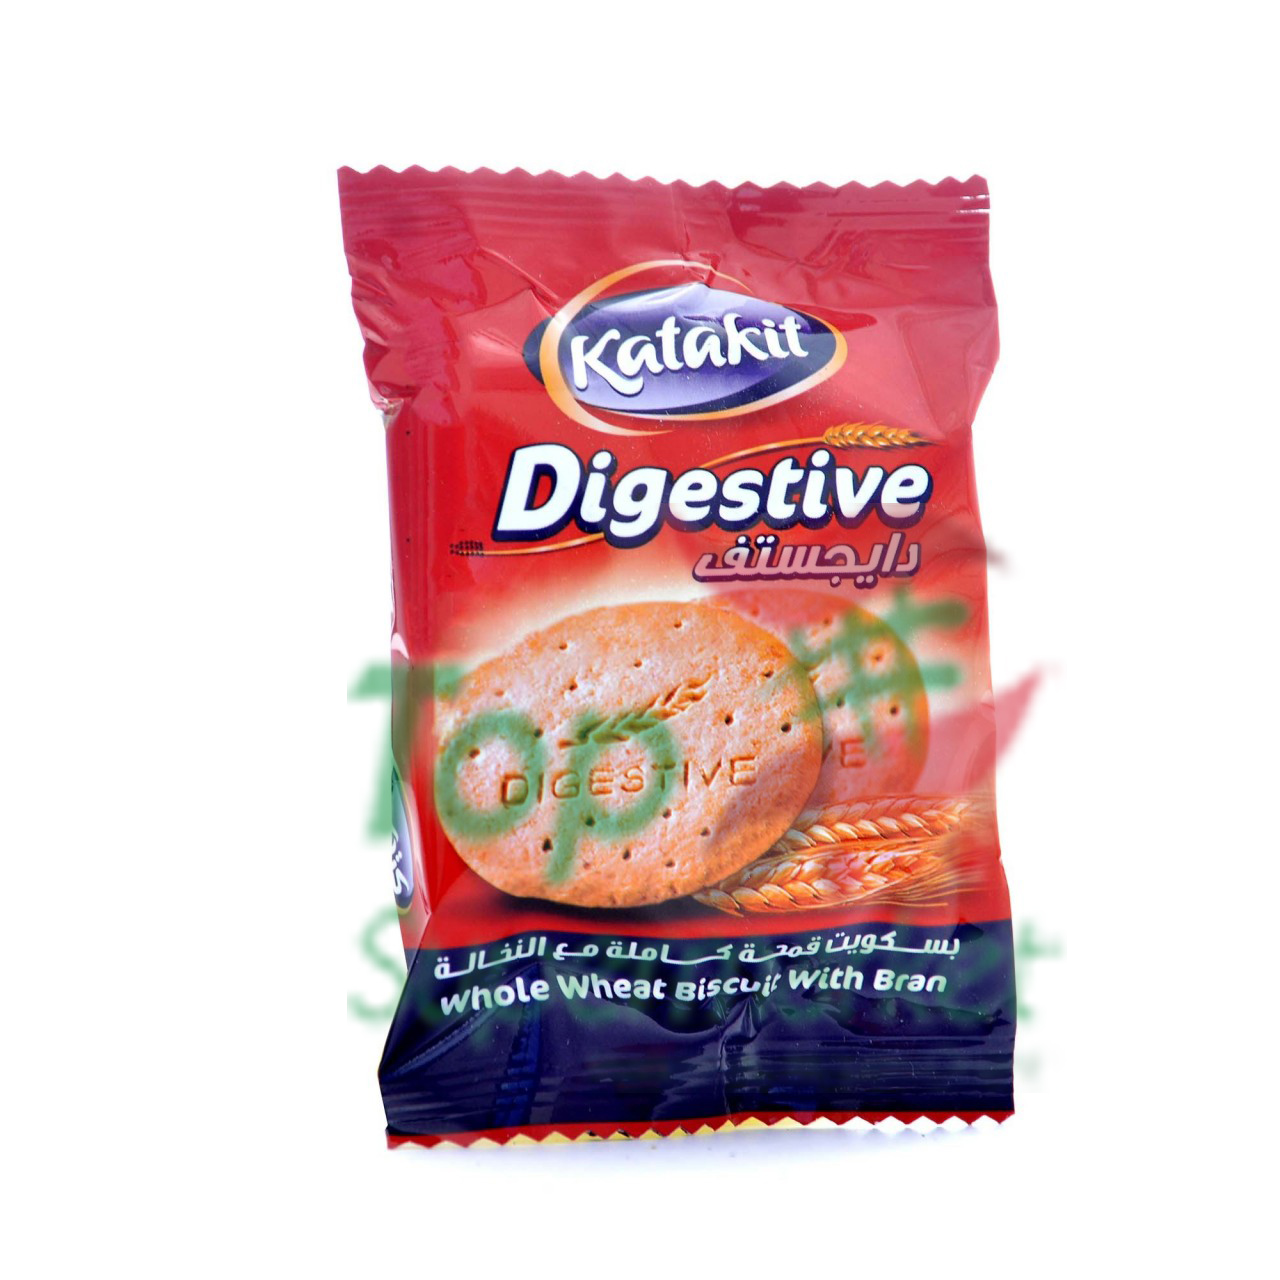 Katakit Digestive Biscui